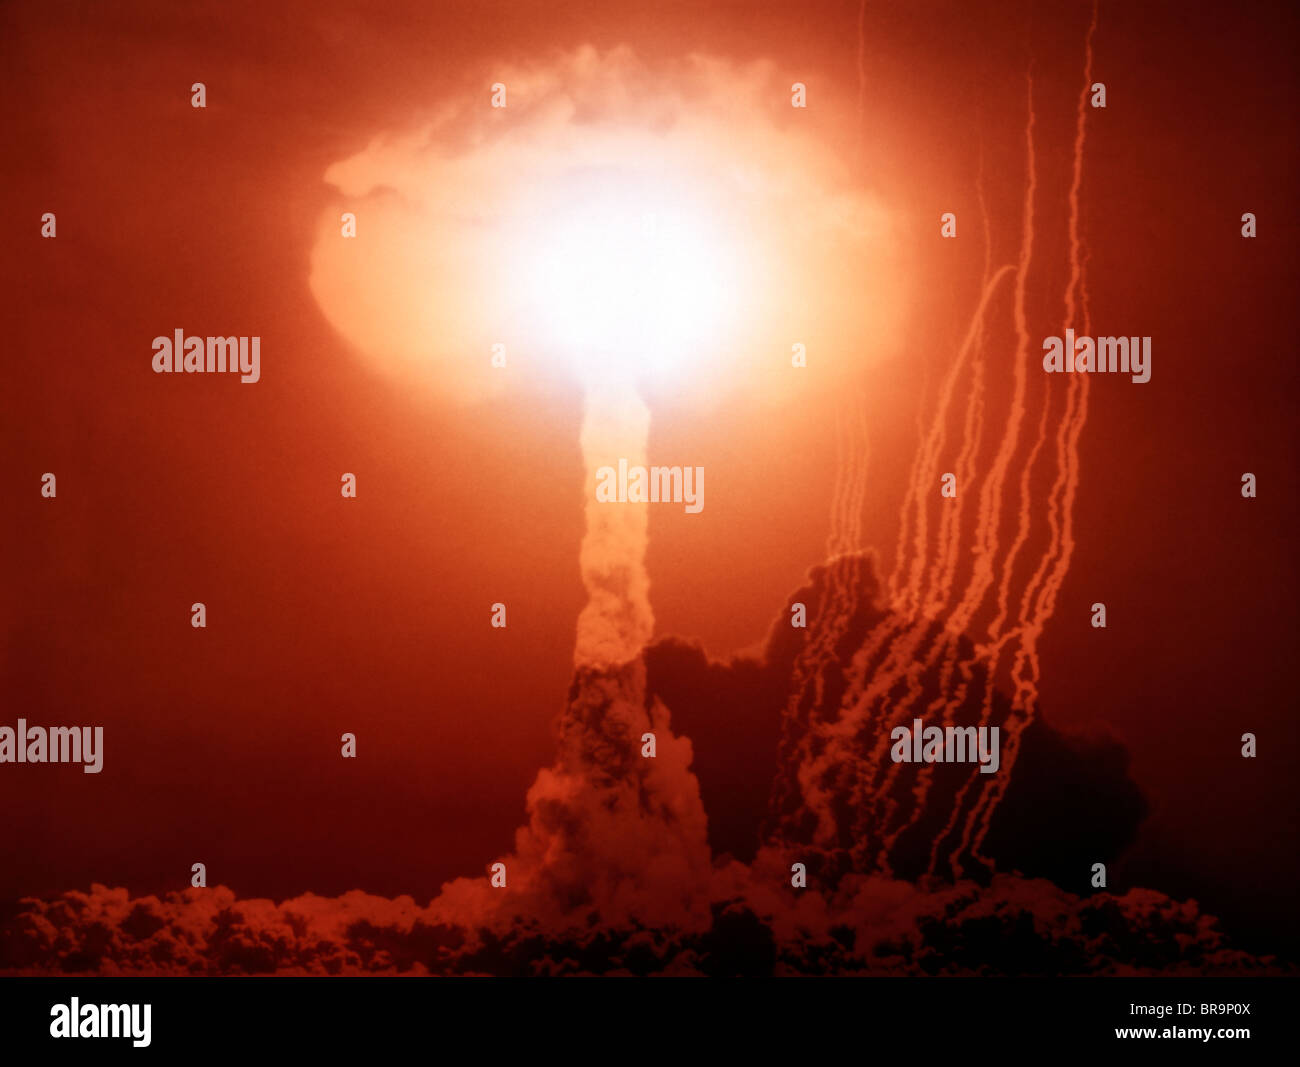 1950s ATOM BOMB MUSHROOM CLOUD EXPLOSION Stock Photo